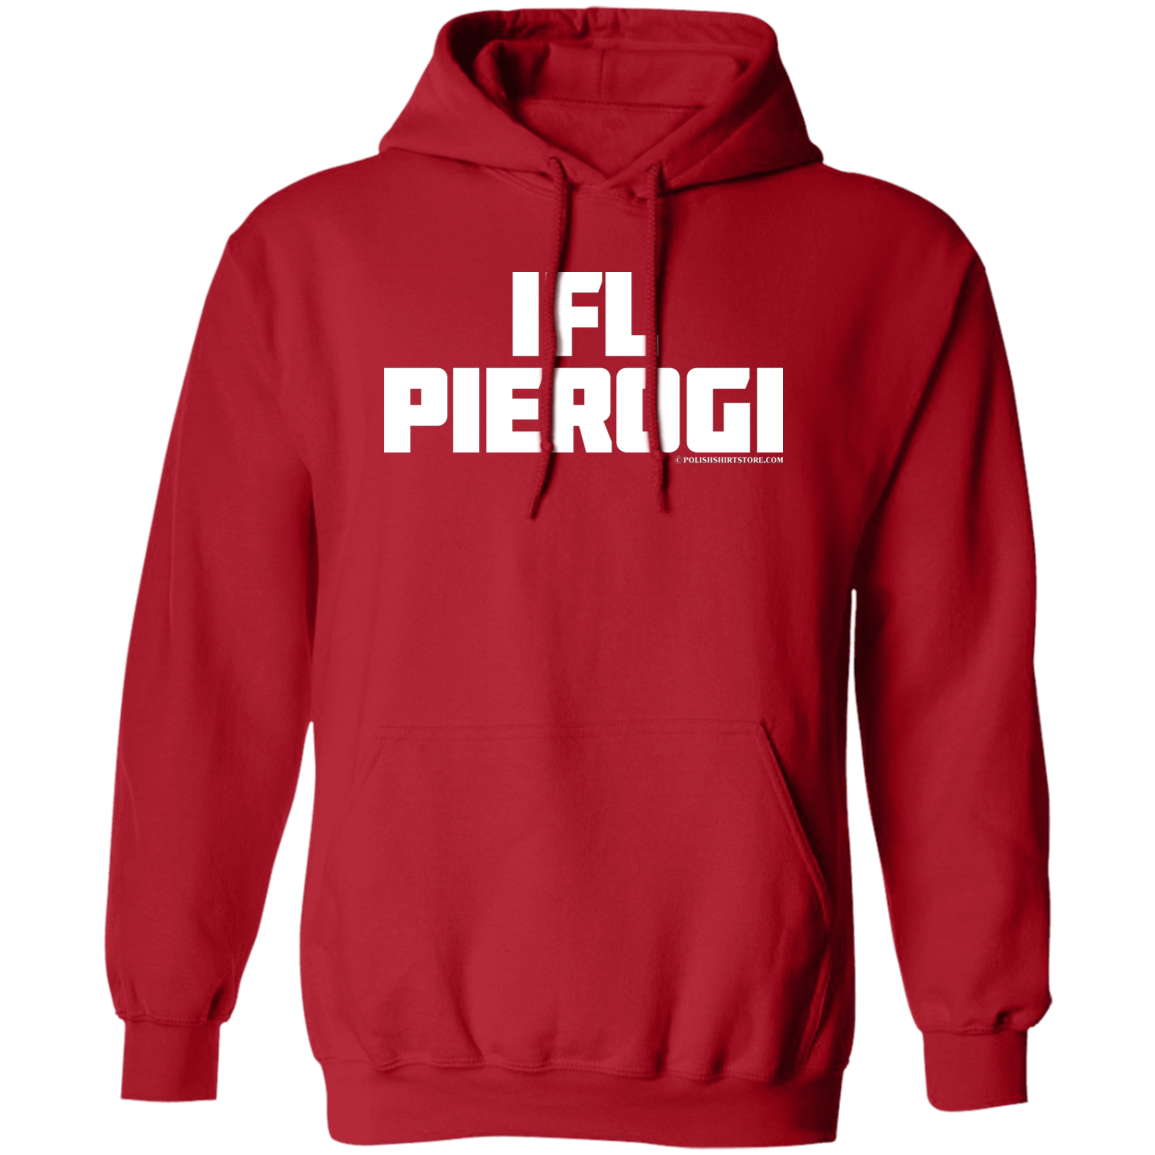 IFL Pierogi Apparel CustomCat G185 Pullover Hoodie Red S